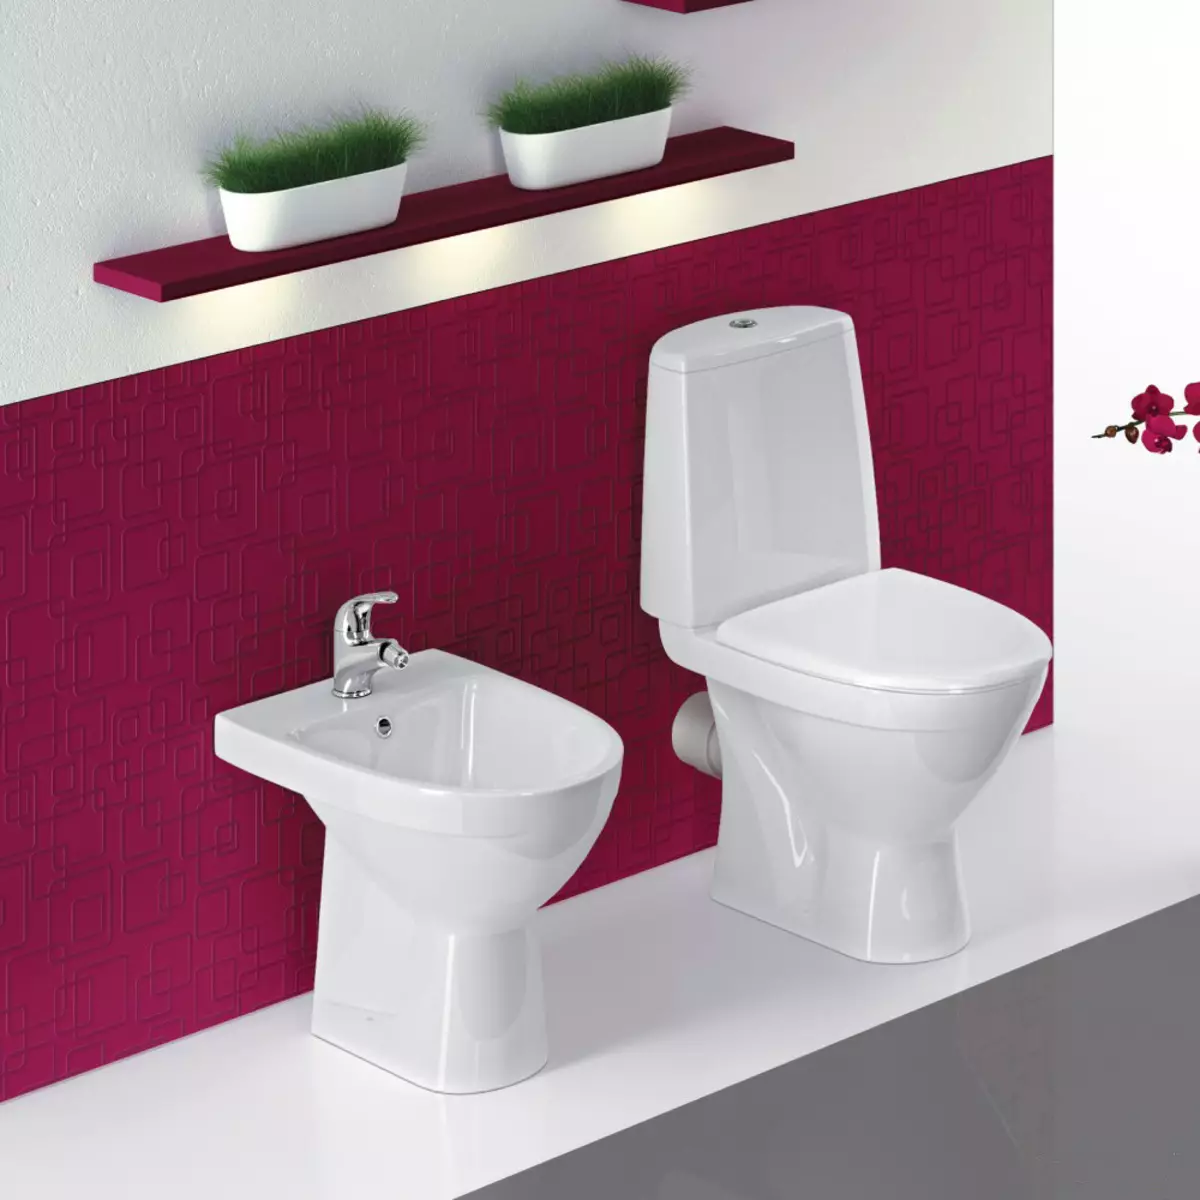 Toilettenschüssel mit schrägem Release: Importierte Lager Unitaz-Compact, Edition Ecke, Cable Compact-Toilette und andere Modelle mit schräger Freisetzung 10523_30